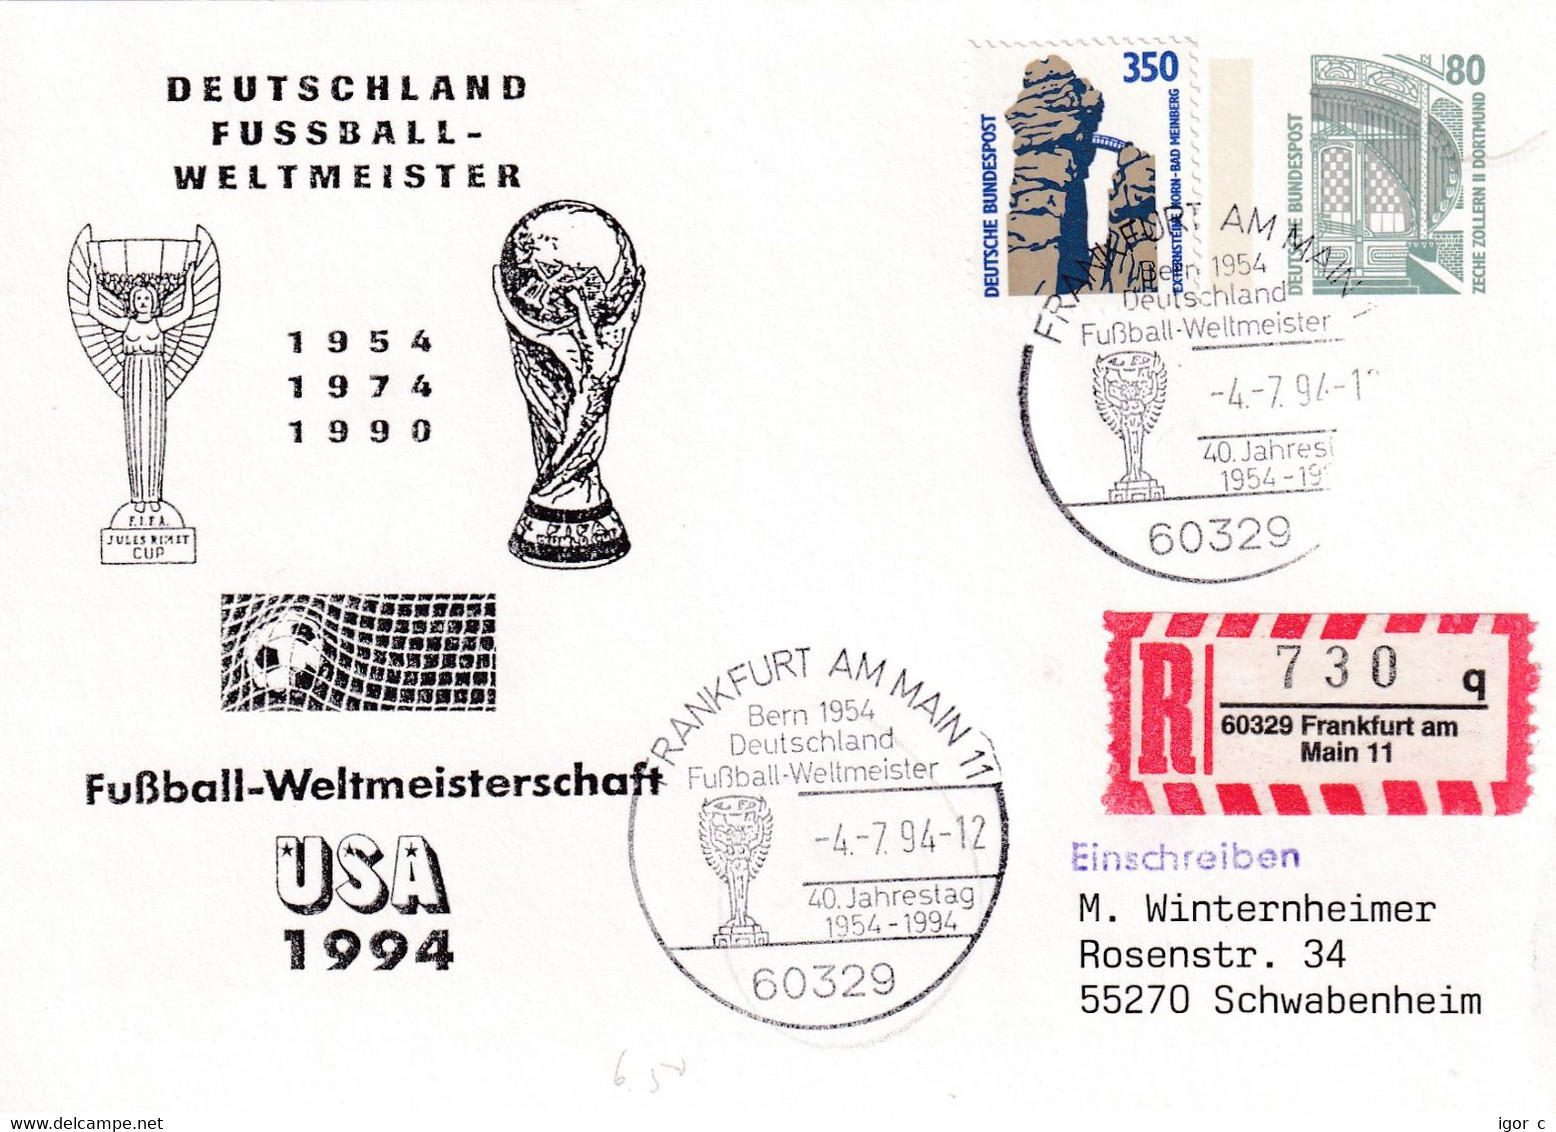 USA 1994 Registered Postal Stationery Card: Football Soccer Calcio Fussball; FIFA World Cup USA; Wunder Von Bern - 1954 – Suisse